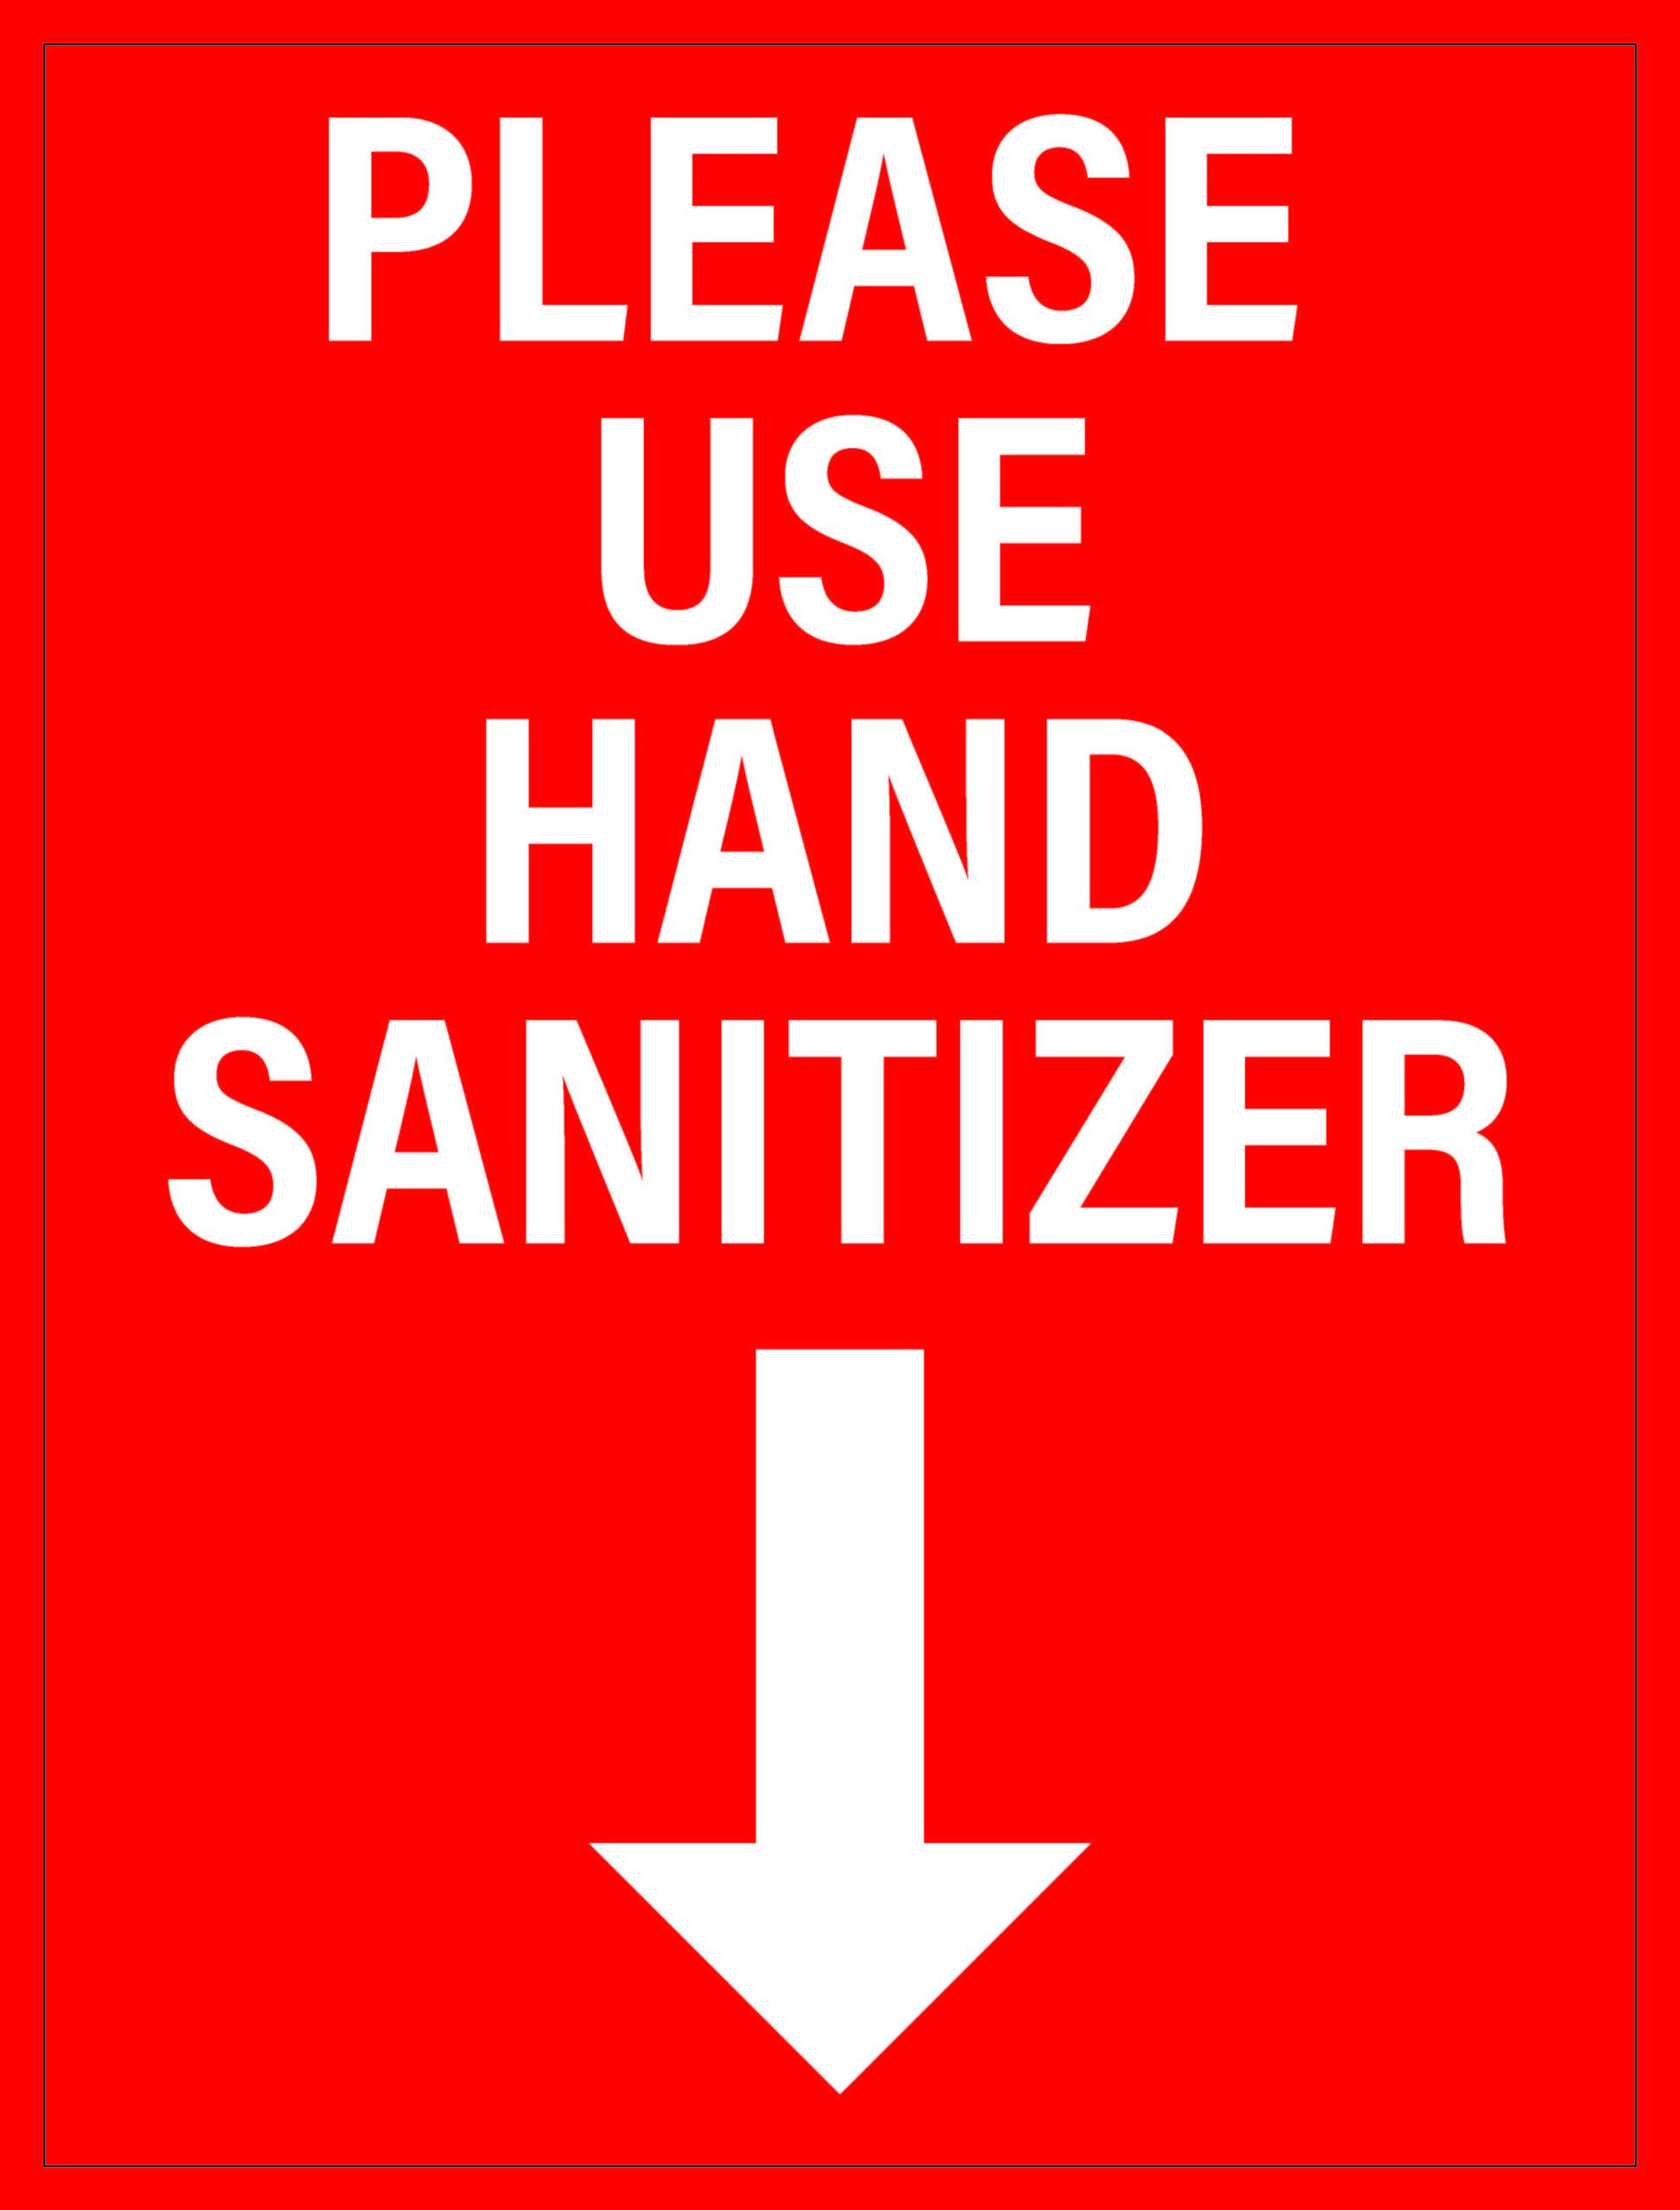 Sanitizer Stand Signs Foam Board 18x24"